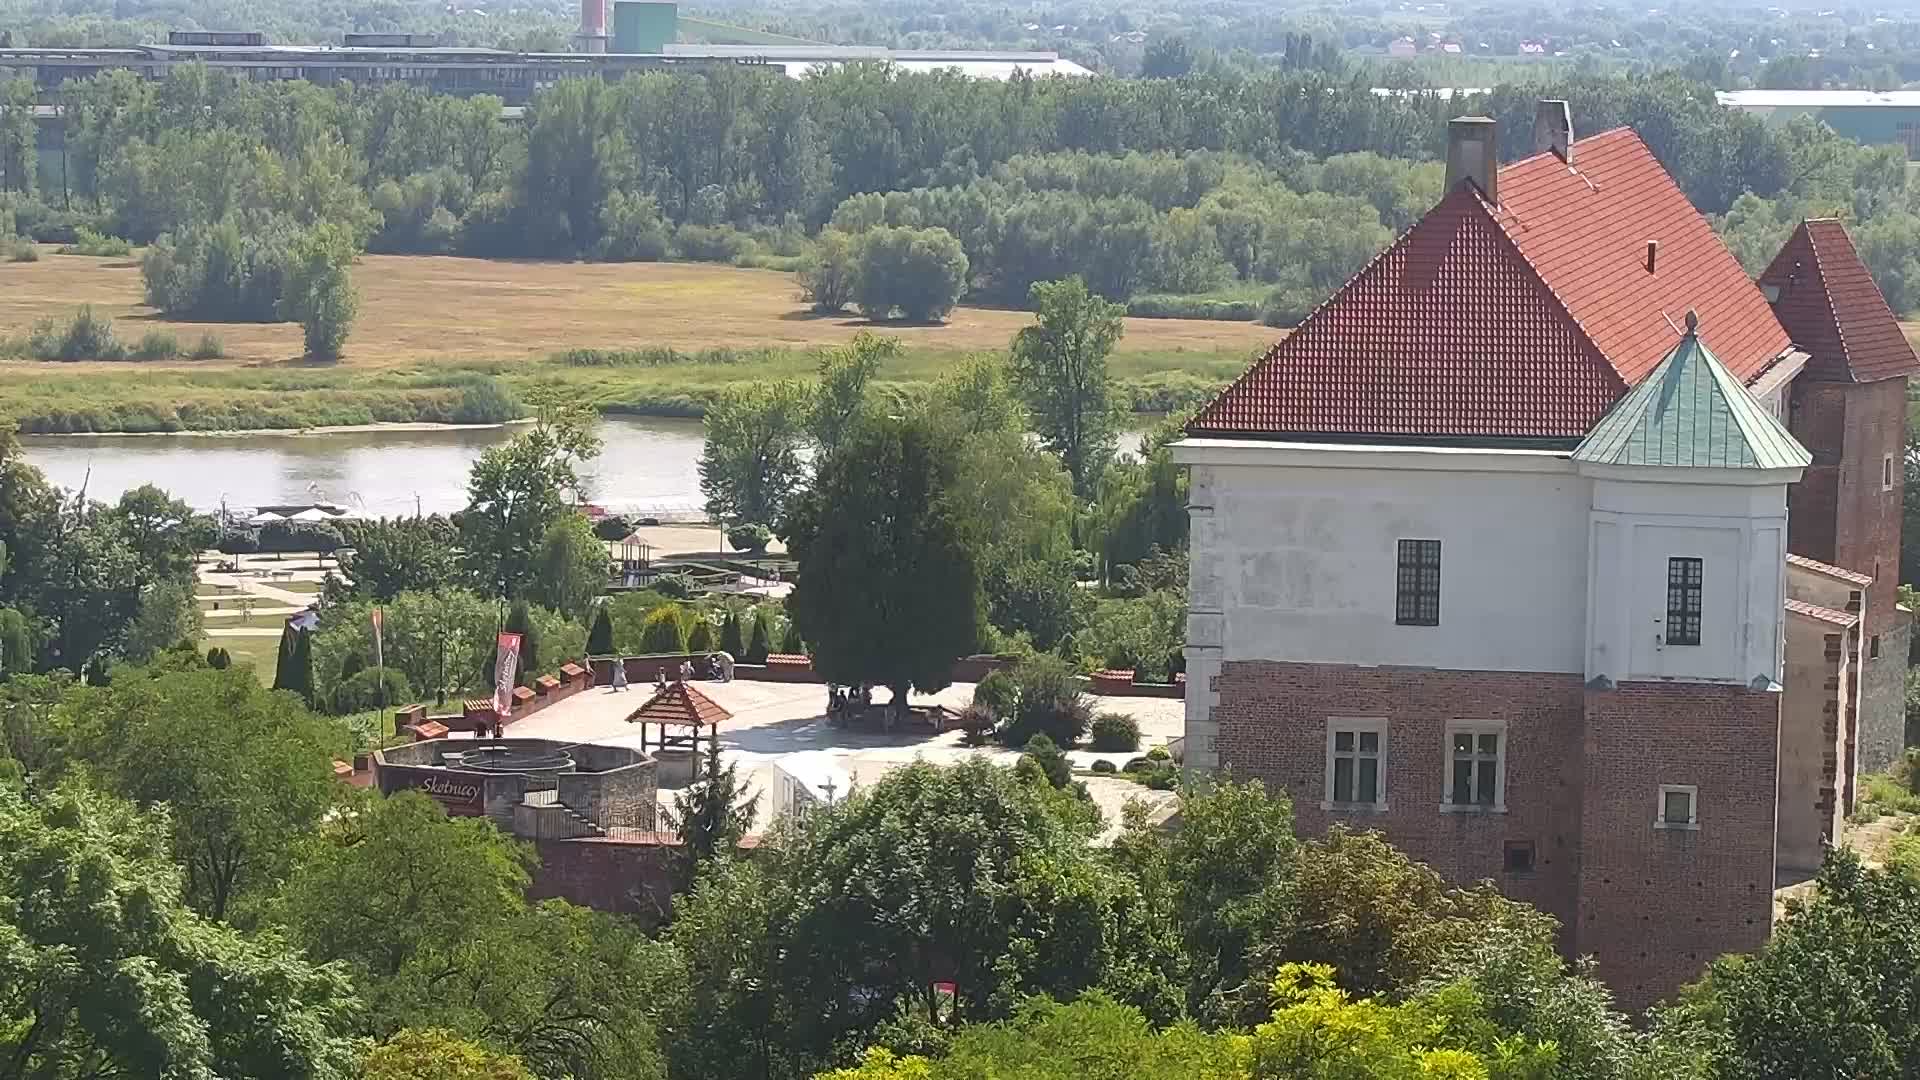 Sandomierz - panorama of the town